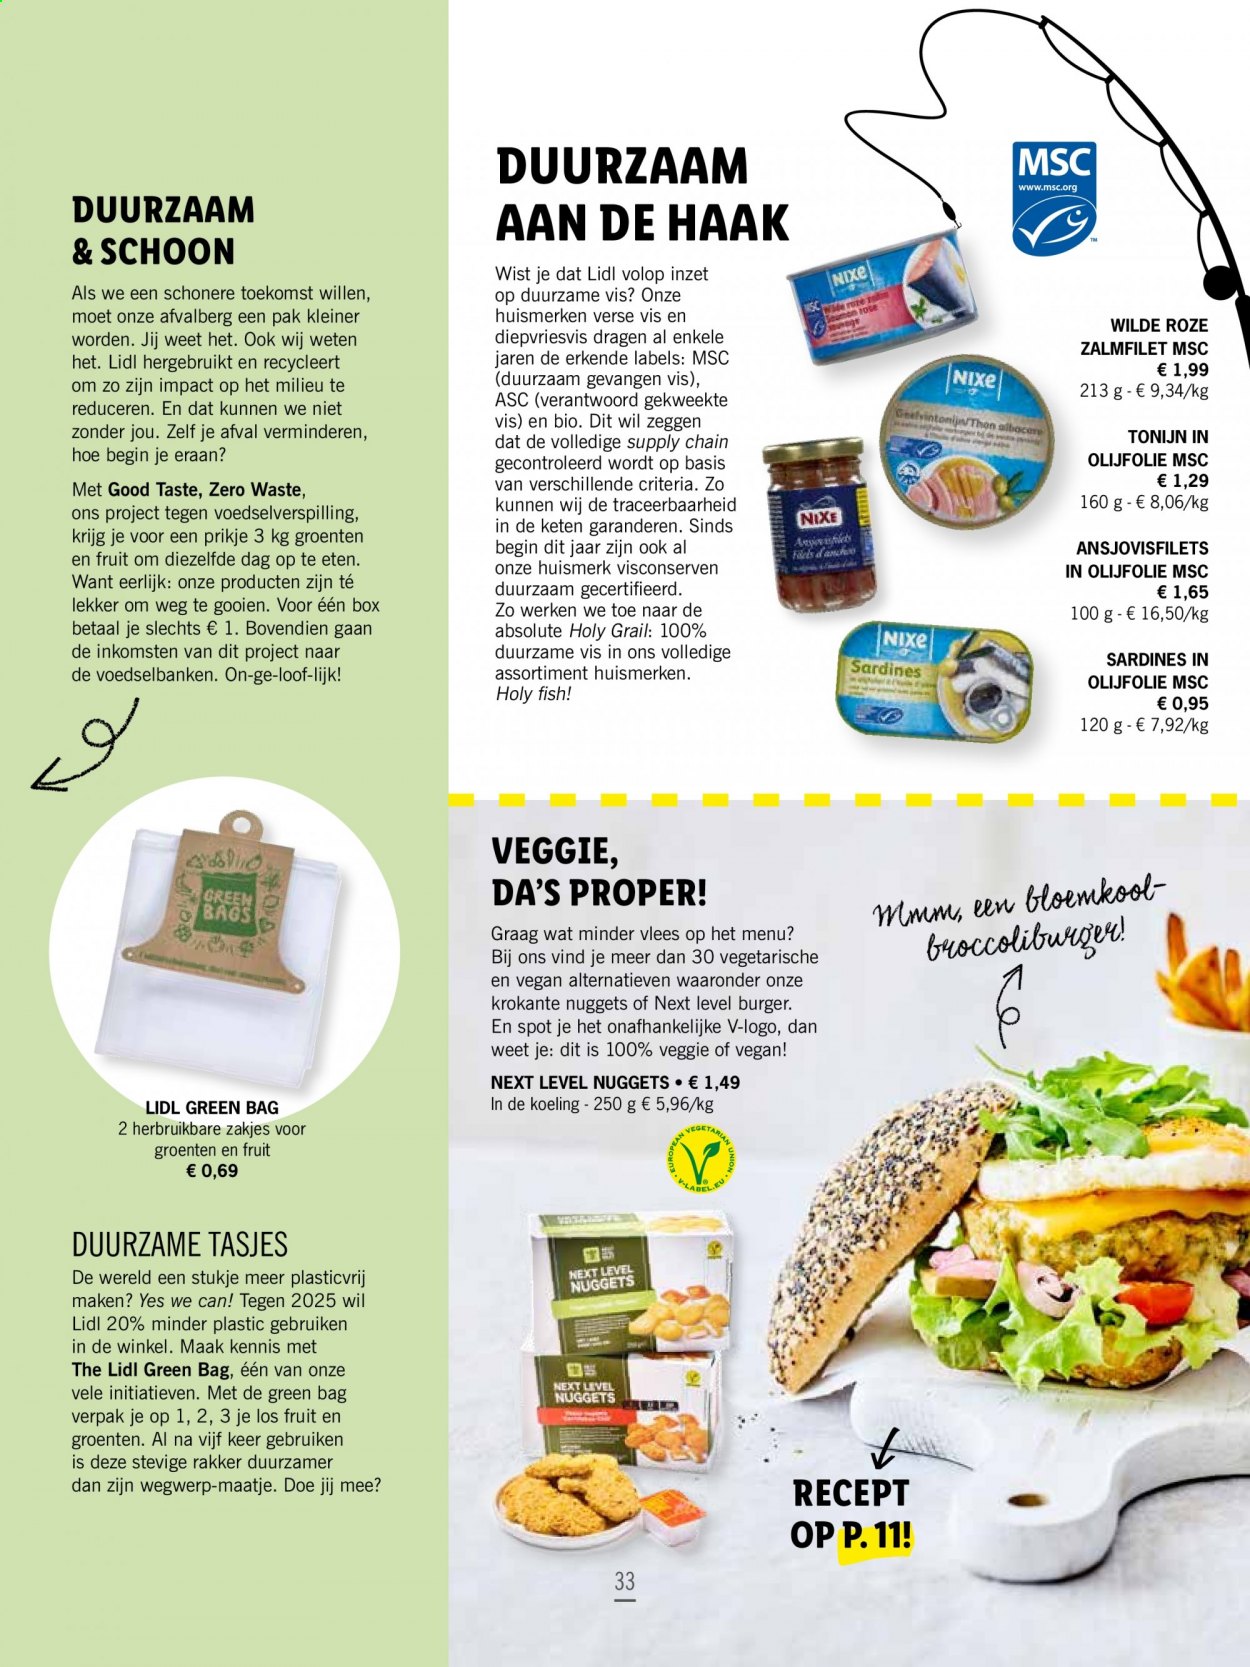 thumbnail - Lidl-aanbieding -  producten in de aanbieding - Moët & Chandon, tonijn, zalmfilet, olijfolie, Veggie. Pagina 33.